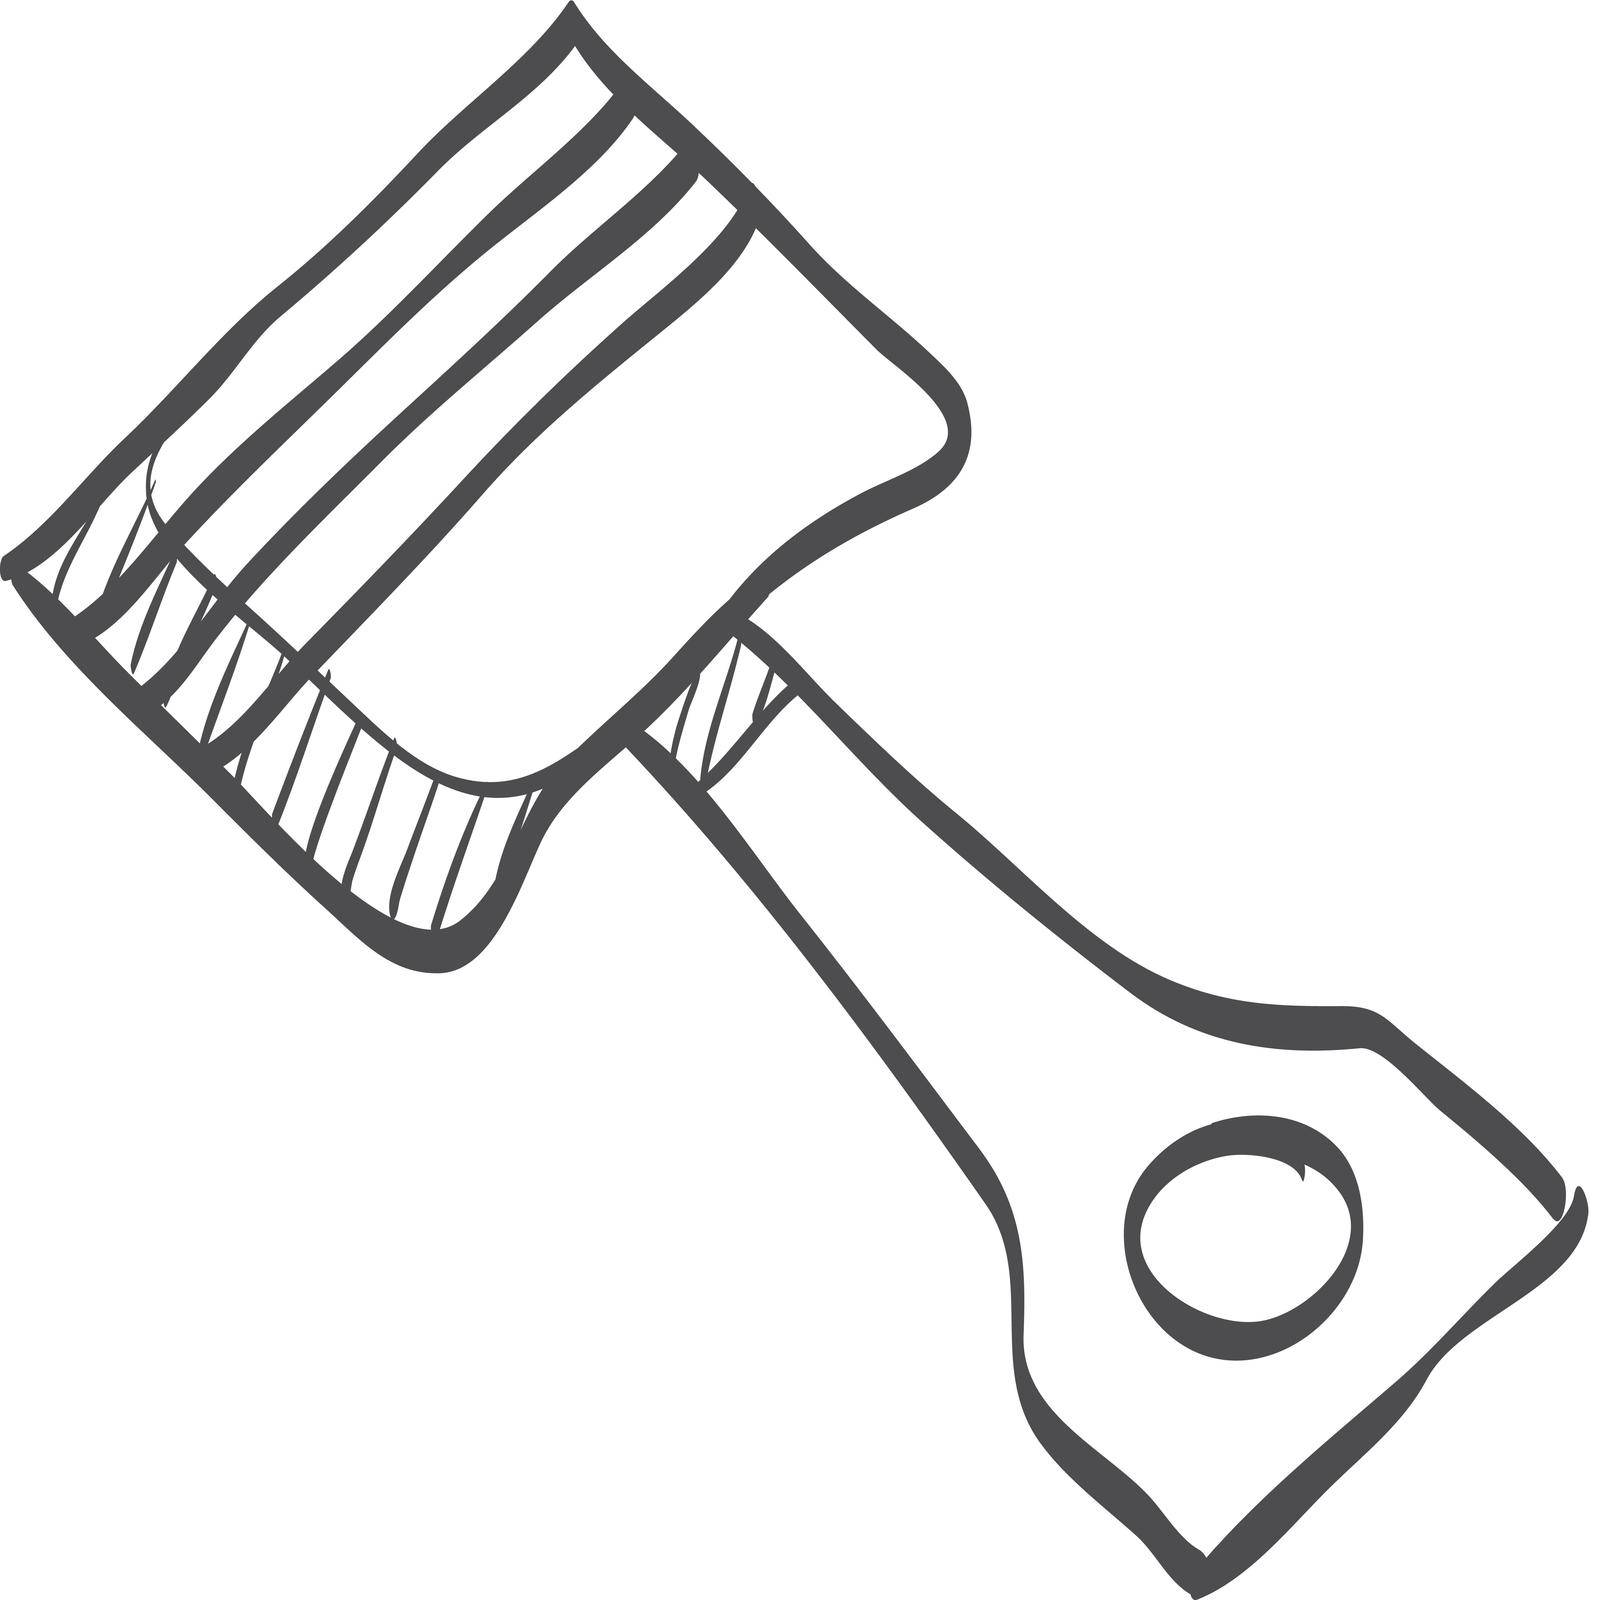 Piston icon in doodle sketch lines. Automotive parts motor auto car technology mechanic